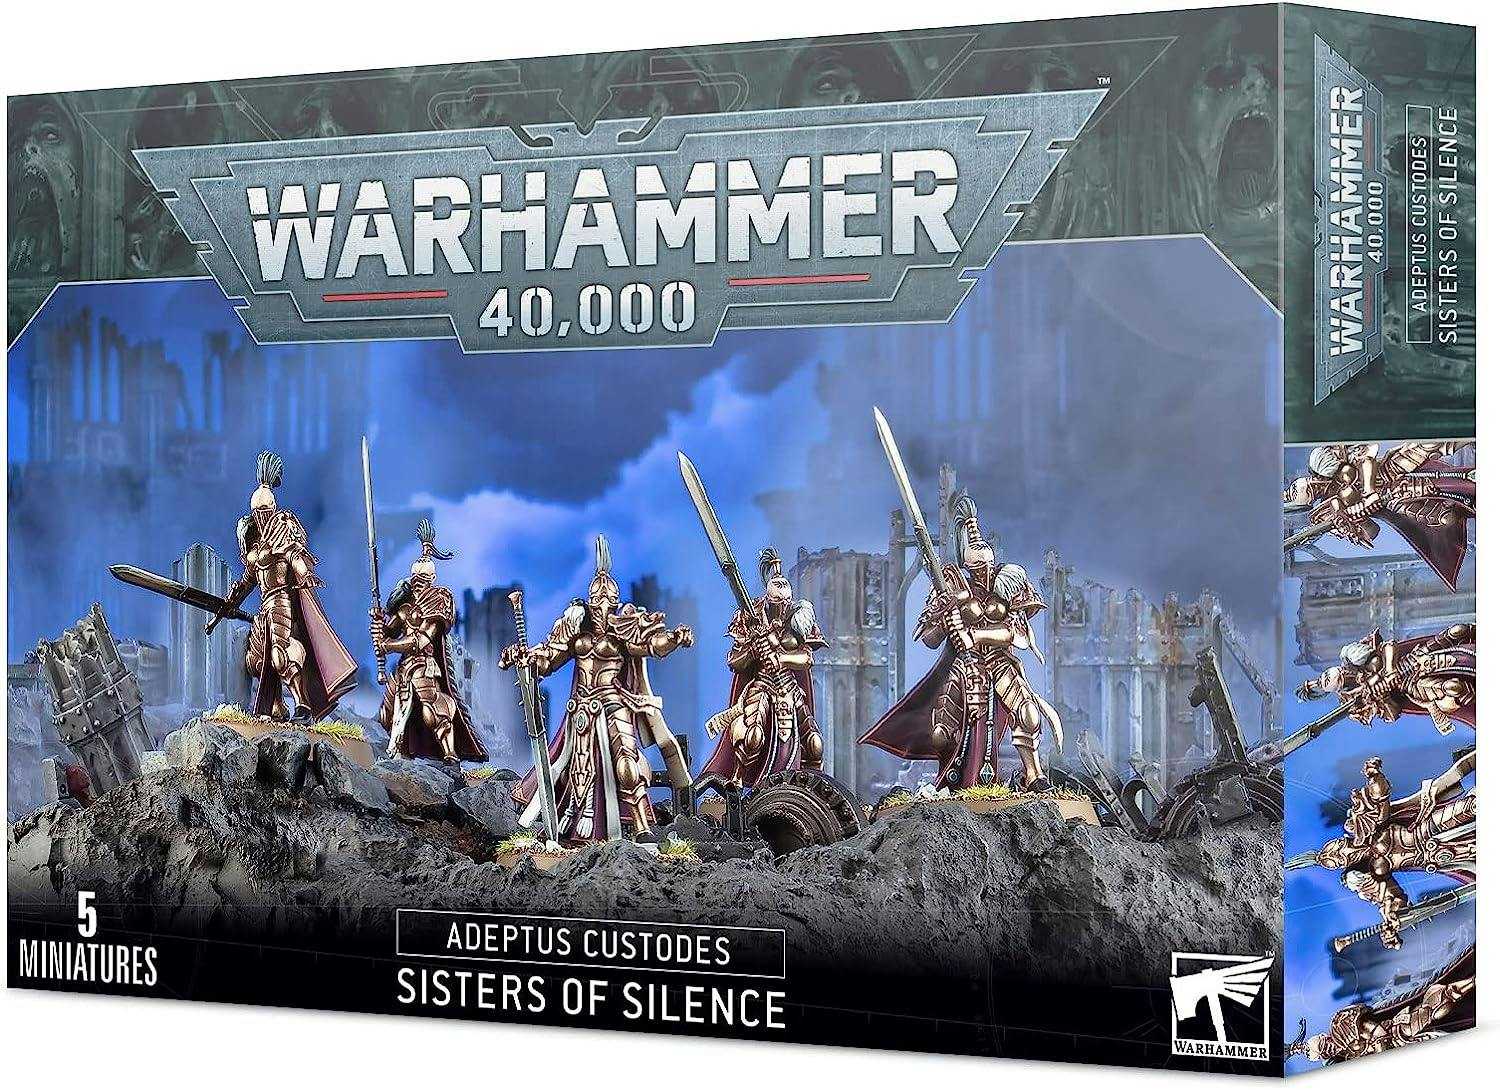 Warhammer 40,000: Adeptus Custodes - Sisters of Silence